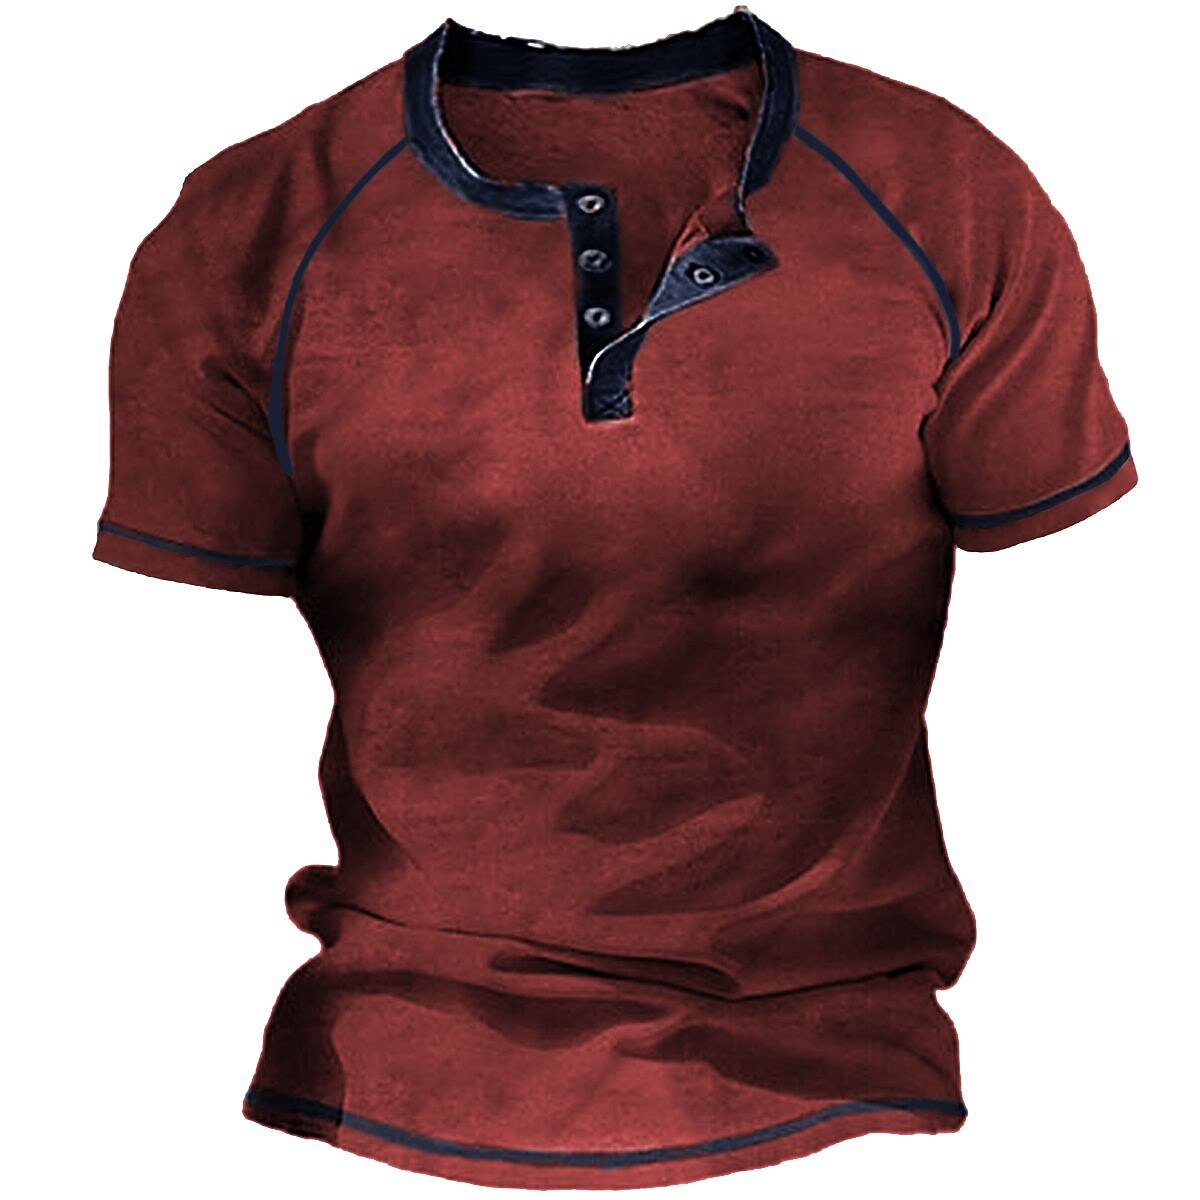 Men's Henley Shirt T shirt Tee Cool Shirt Plain Henley Street Vacation Short Sleeves Clothing Apparel Designer Basic Modern Contemporary